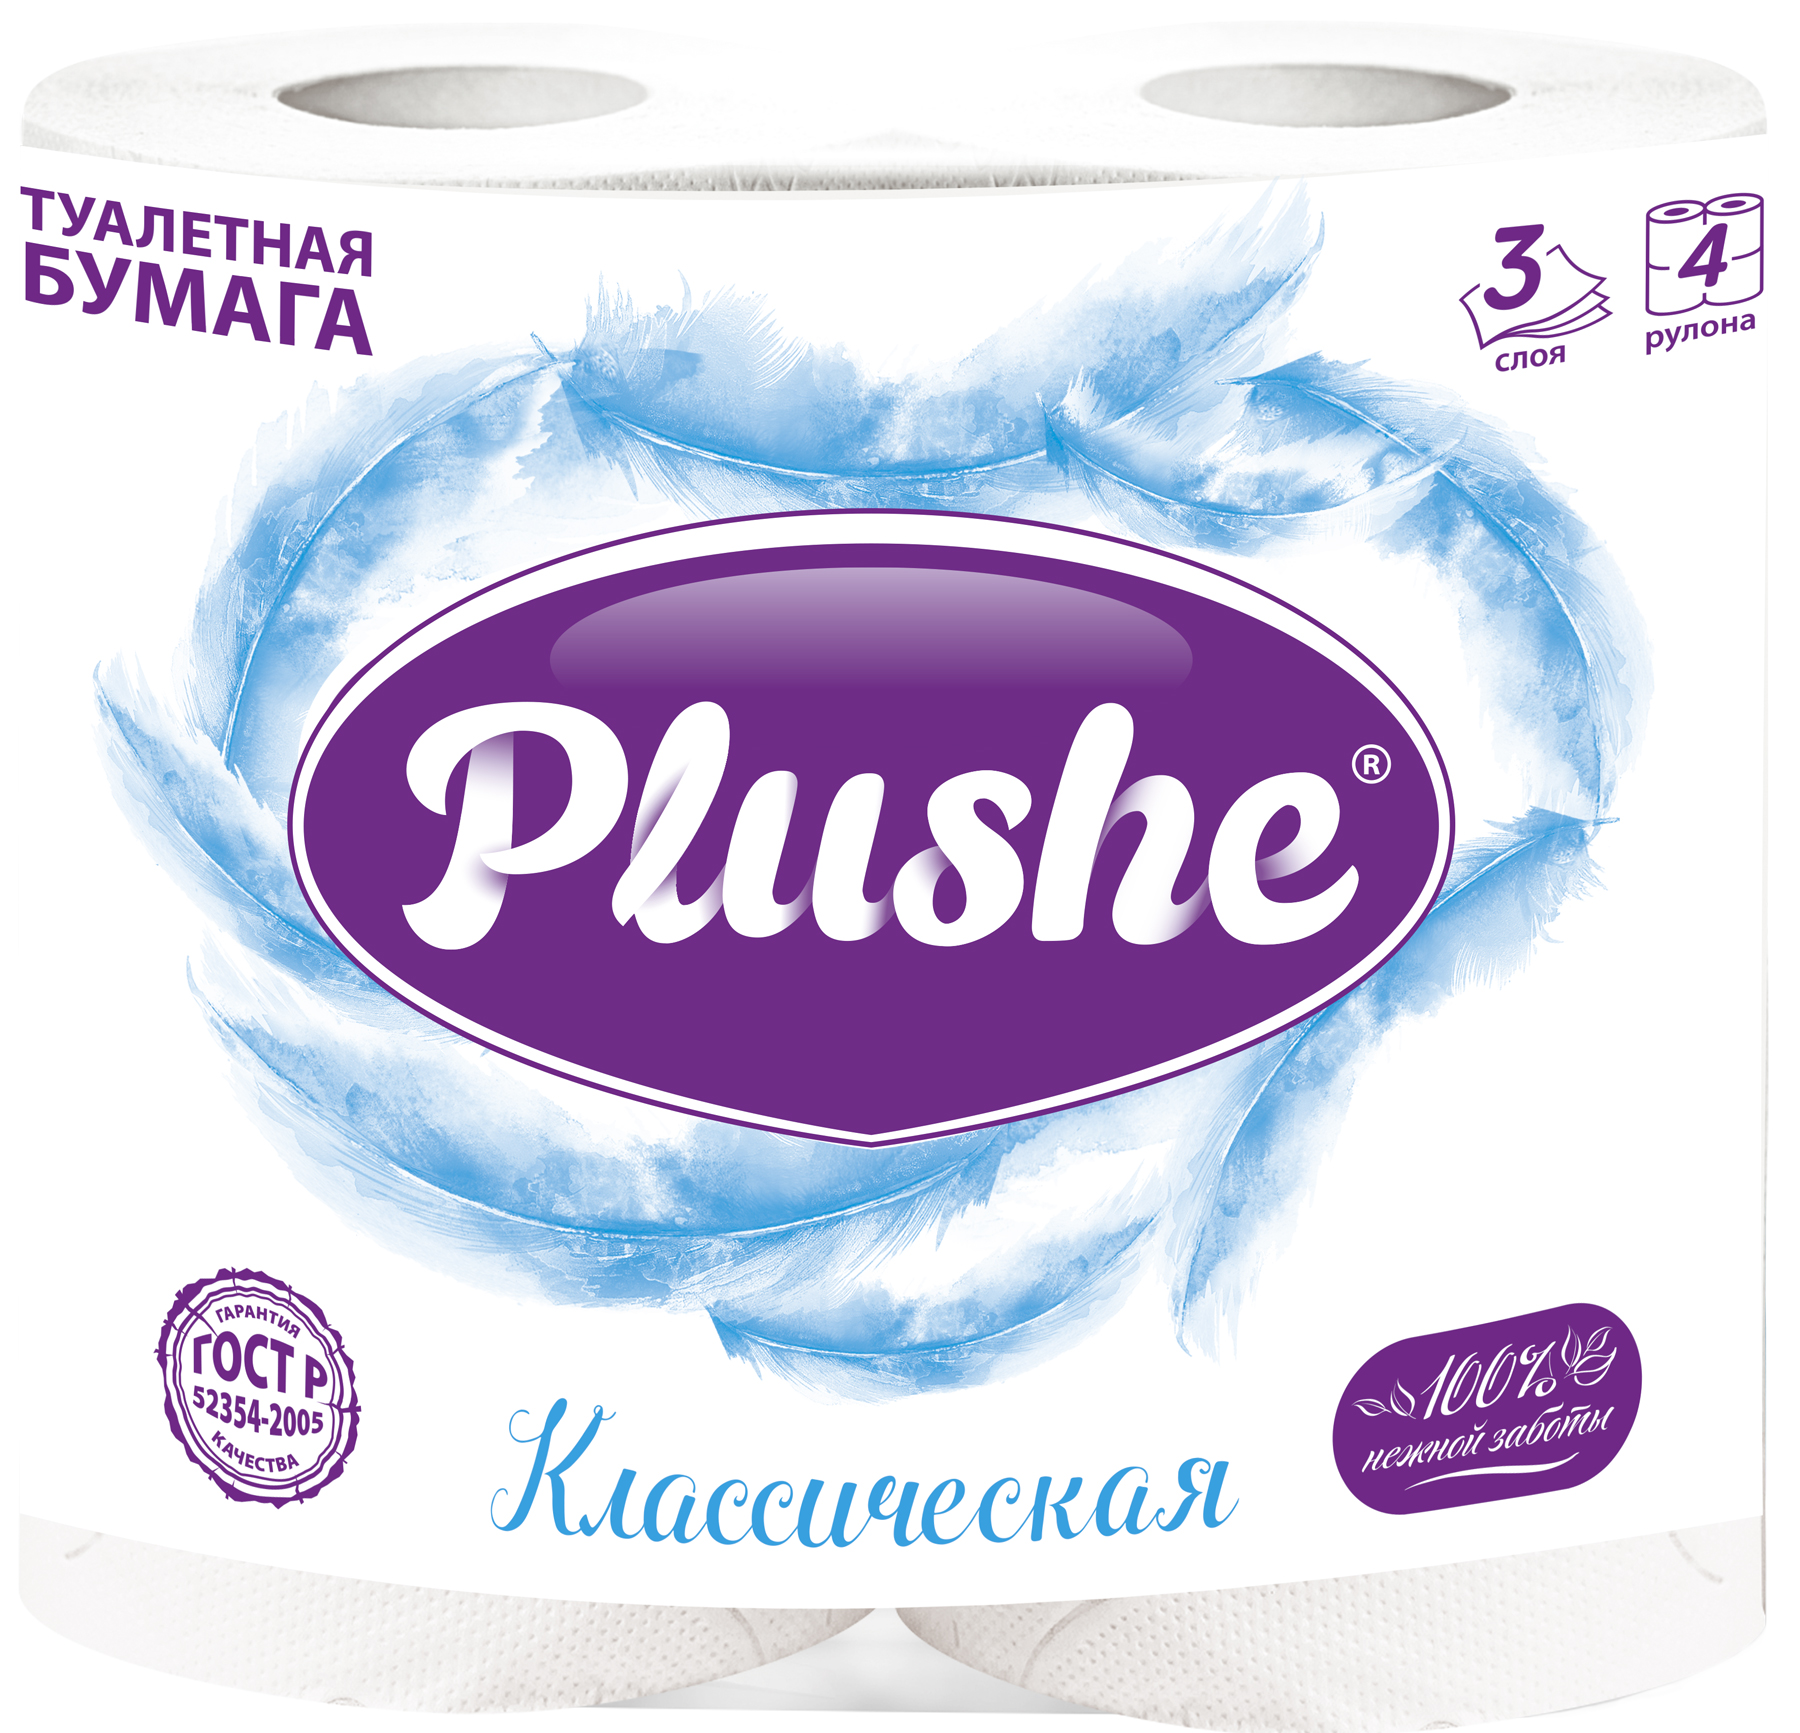 Plushe Туалетная бумага Deluxe Light Классическая 3 сл. № 4